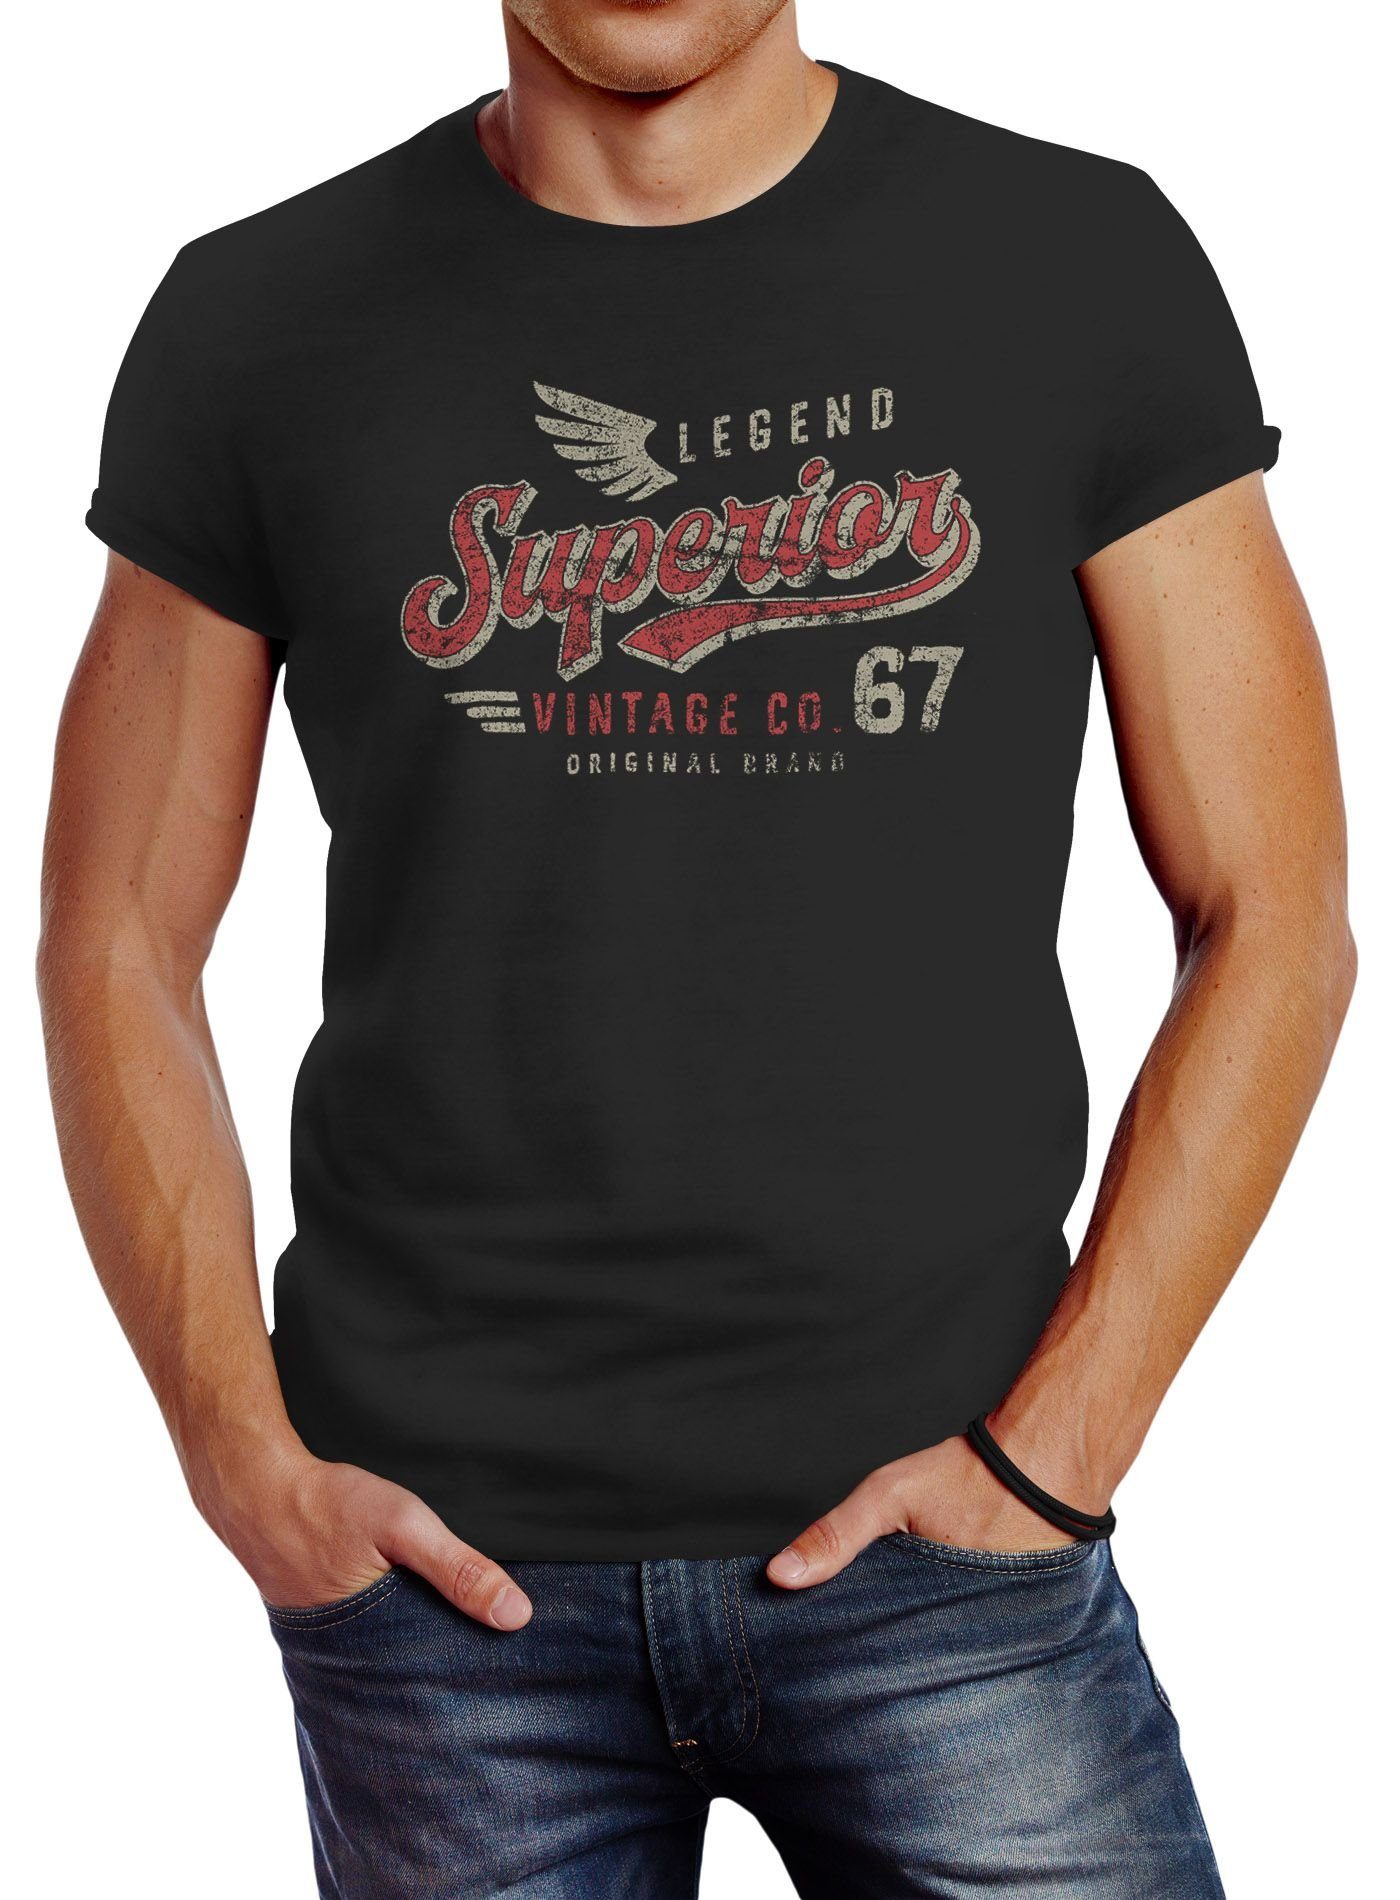 Neverless Print-Shirt Neverless® Herren T-Shirt Vintage Retro Motiv Schriftzug Superior Legend Flügel Fashion Streetstyle mit Print schwarz